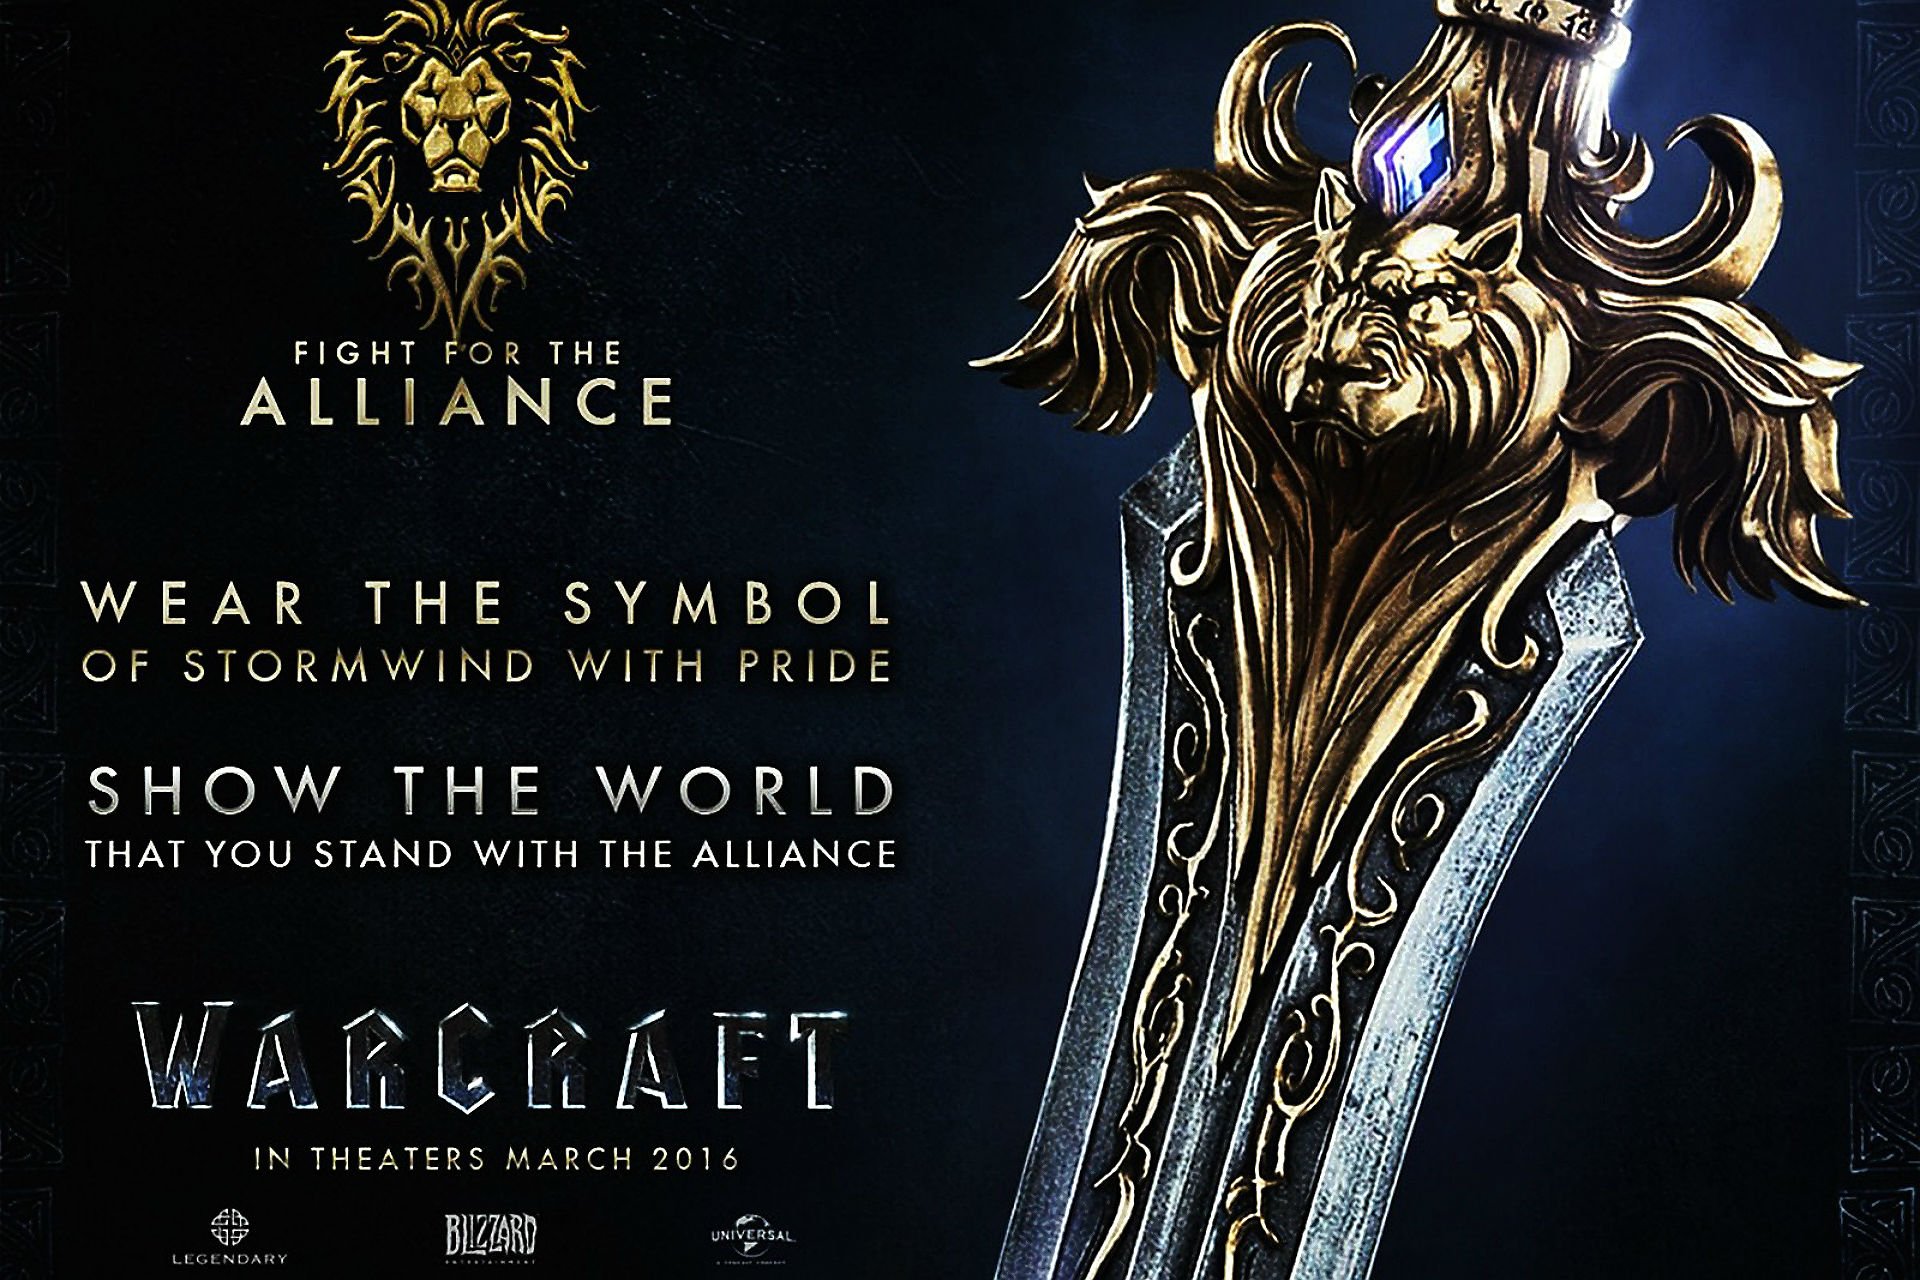 warcraft, Beginning, Fantasy, Action, Fighting, Warrior, Adventure, World, 1wcraft, Poster, Sword Wallpaper